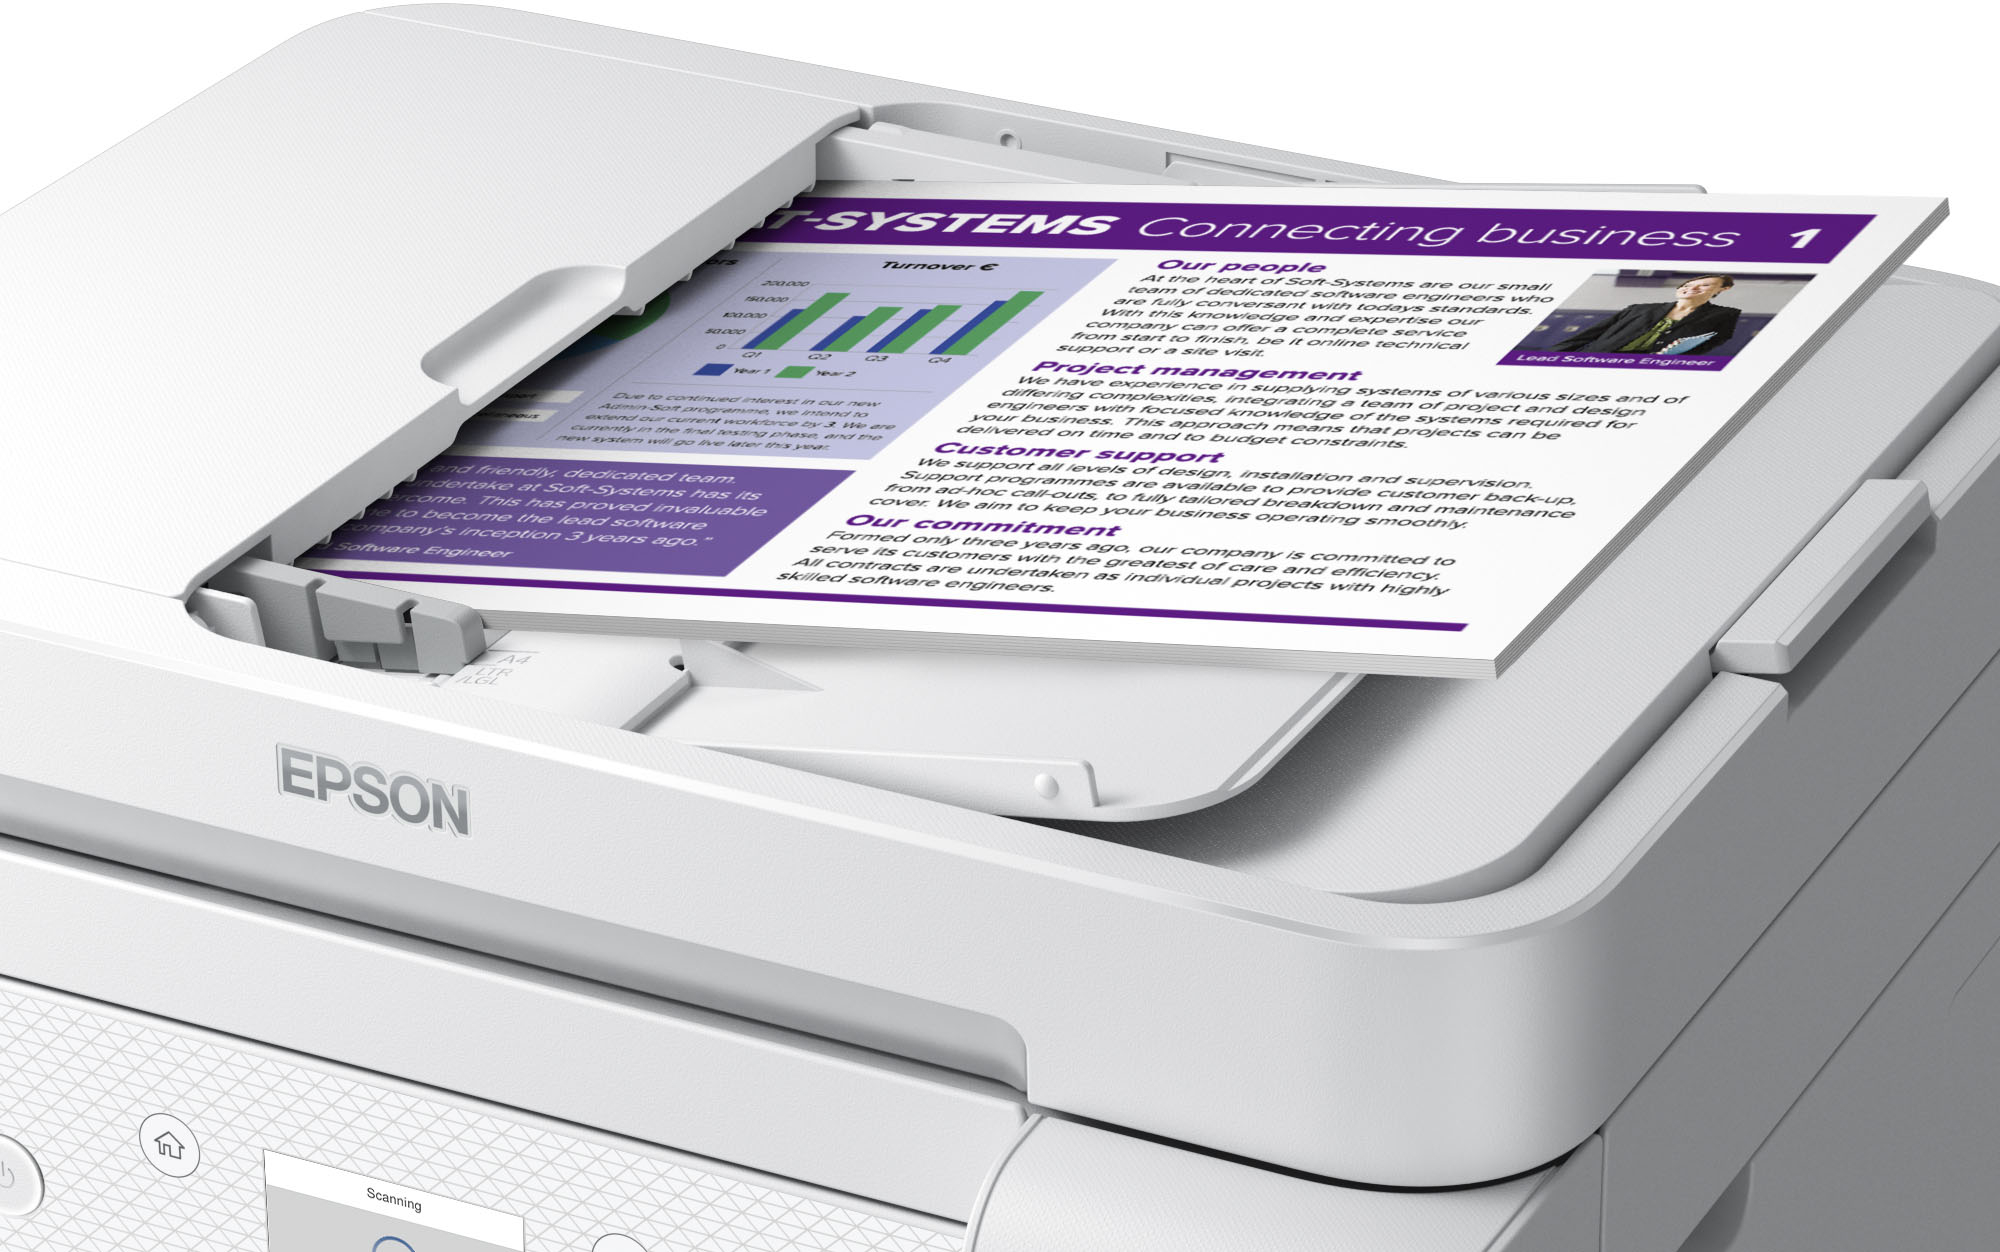 Epson EcoTank ET-3850 Printer Review - Consumer Reports